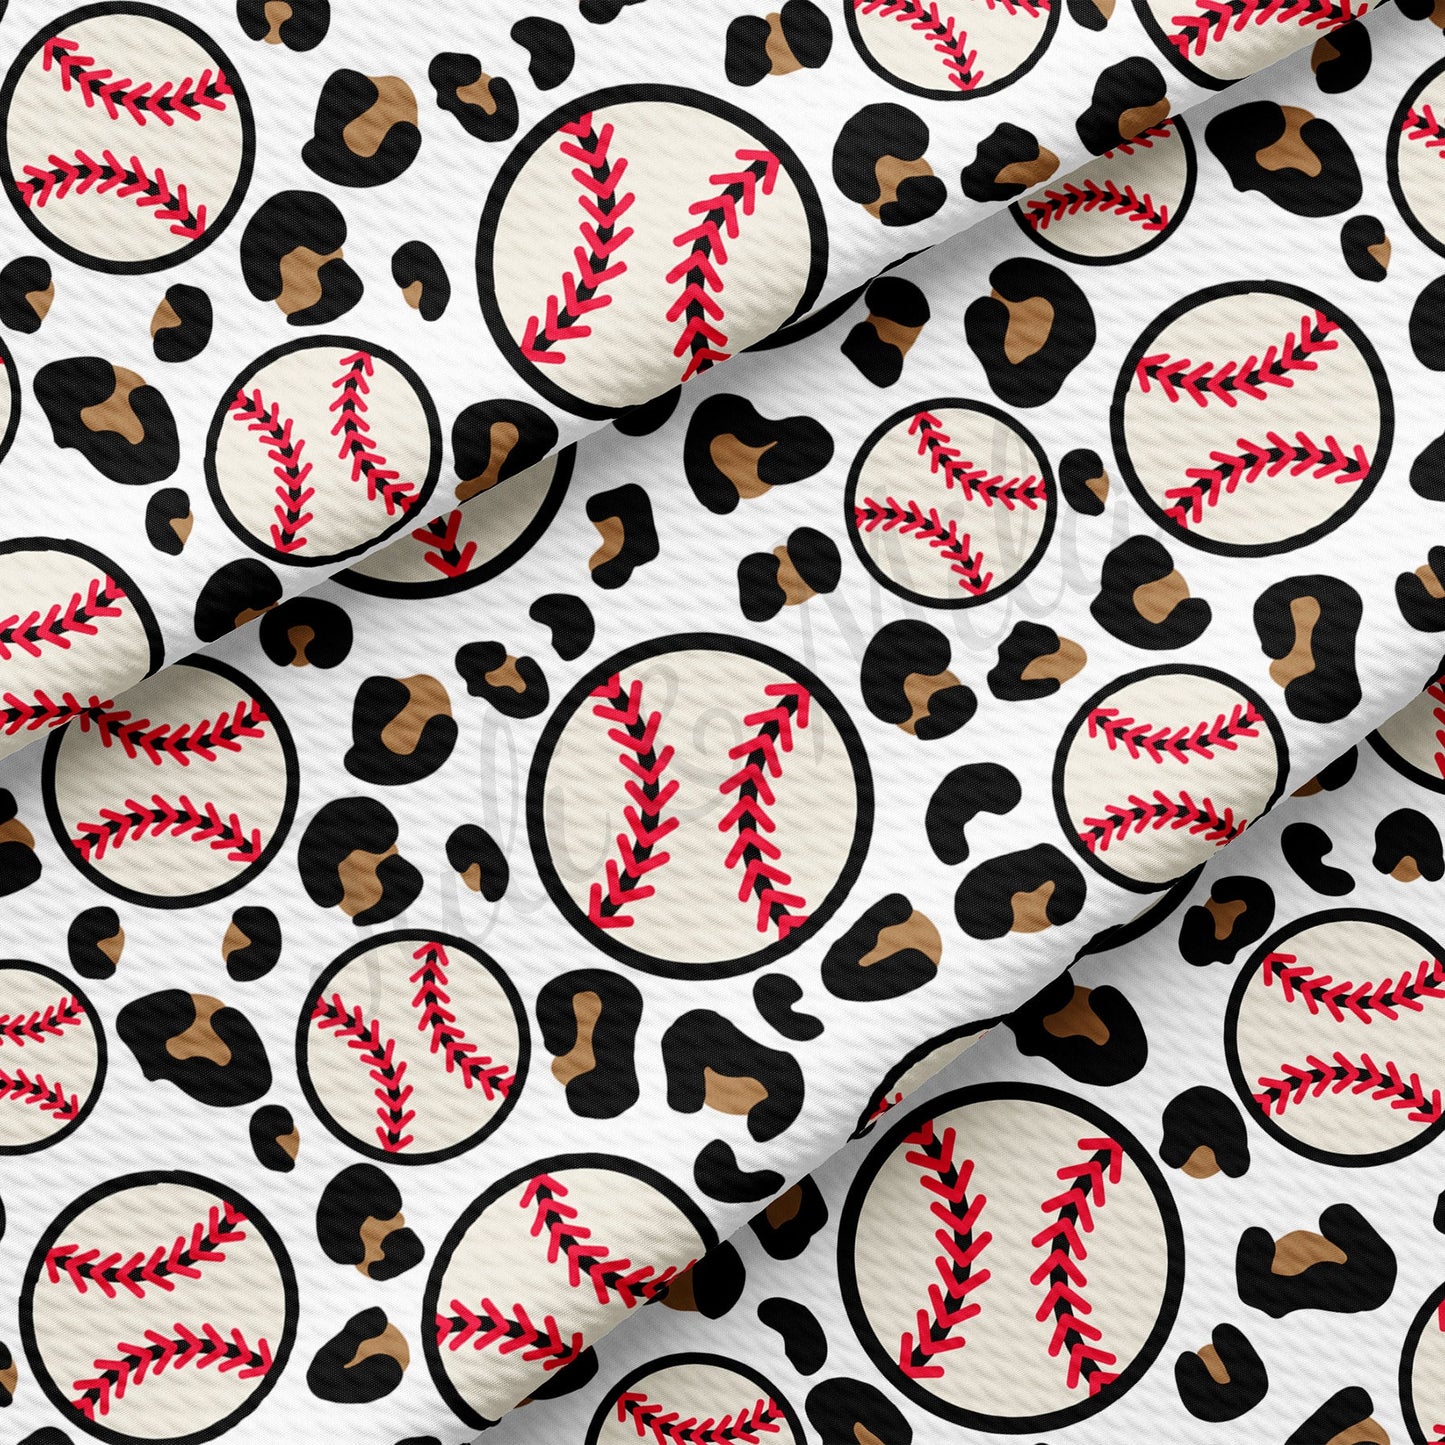 Baseball Cheetah Leopard Bullet Textured Fabric AA932